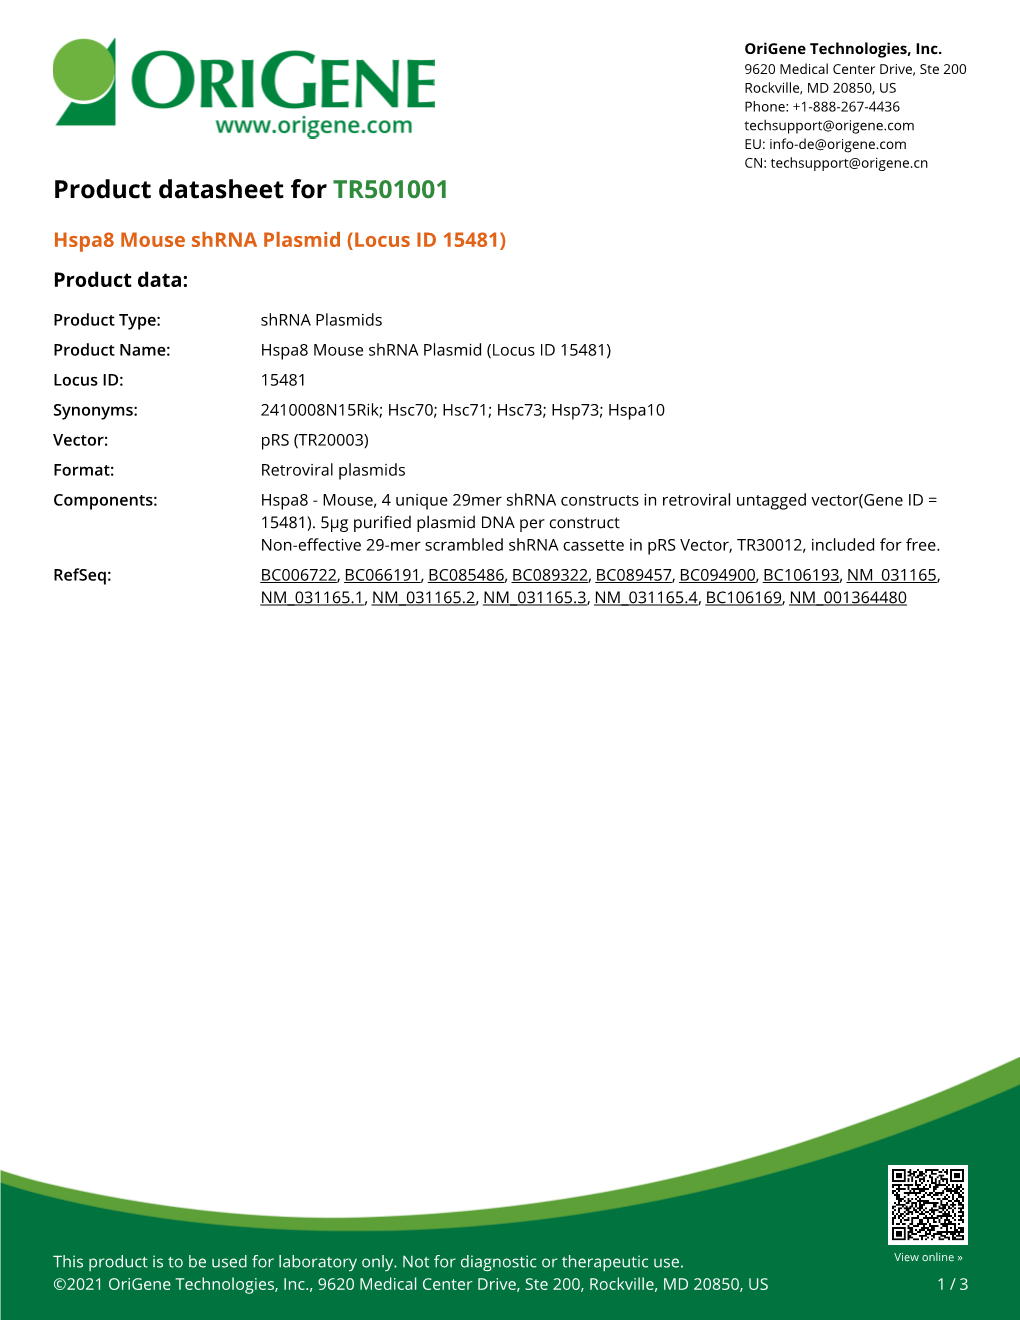 Hspa8 Mouse Shrna Plasmid (Locus ID 15481) Product Data